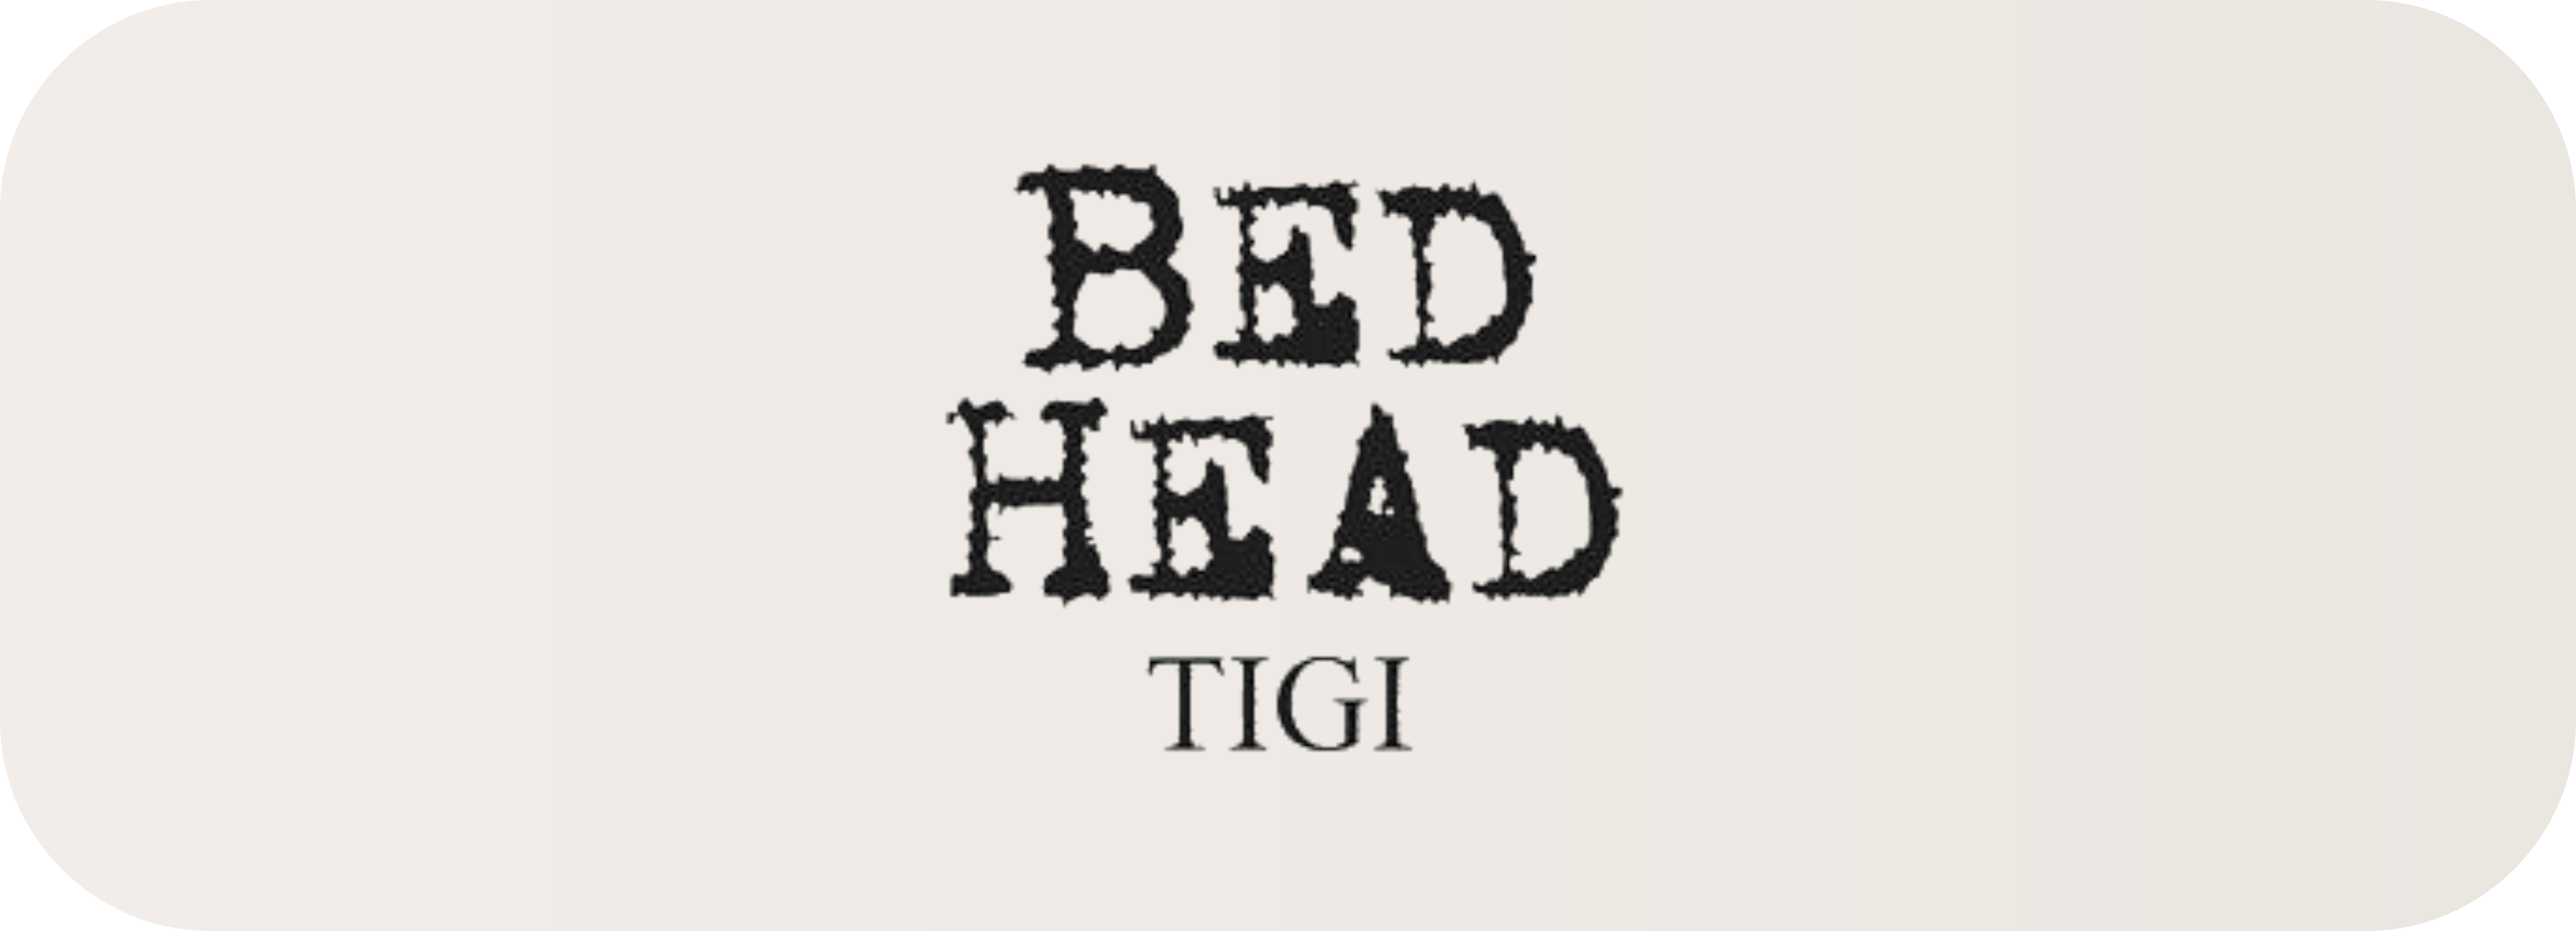 bedhead.png